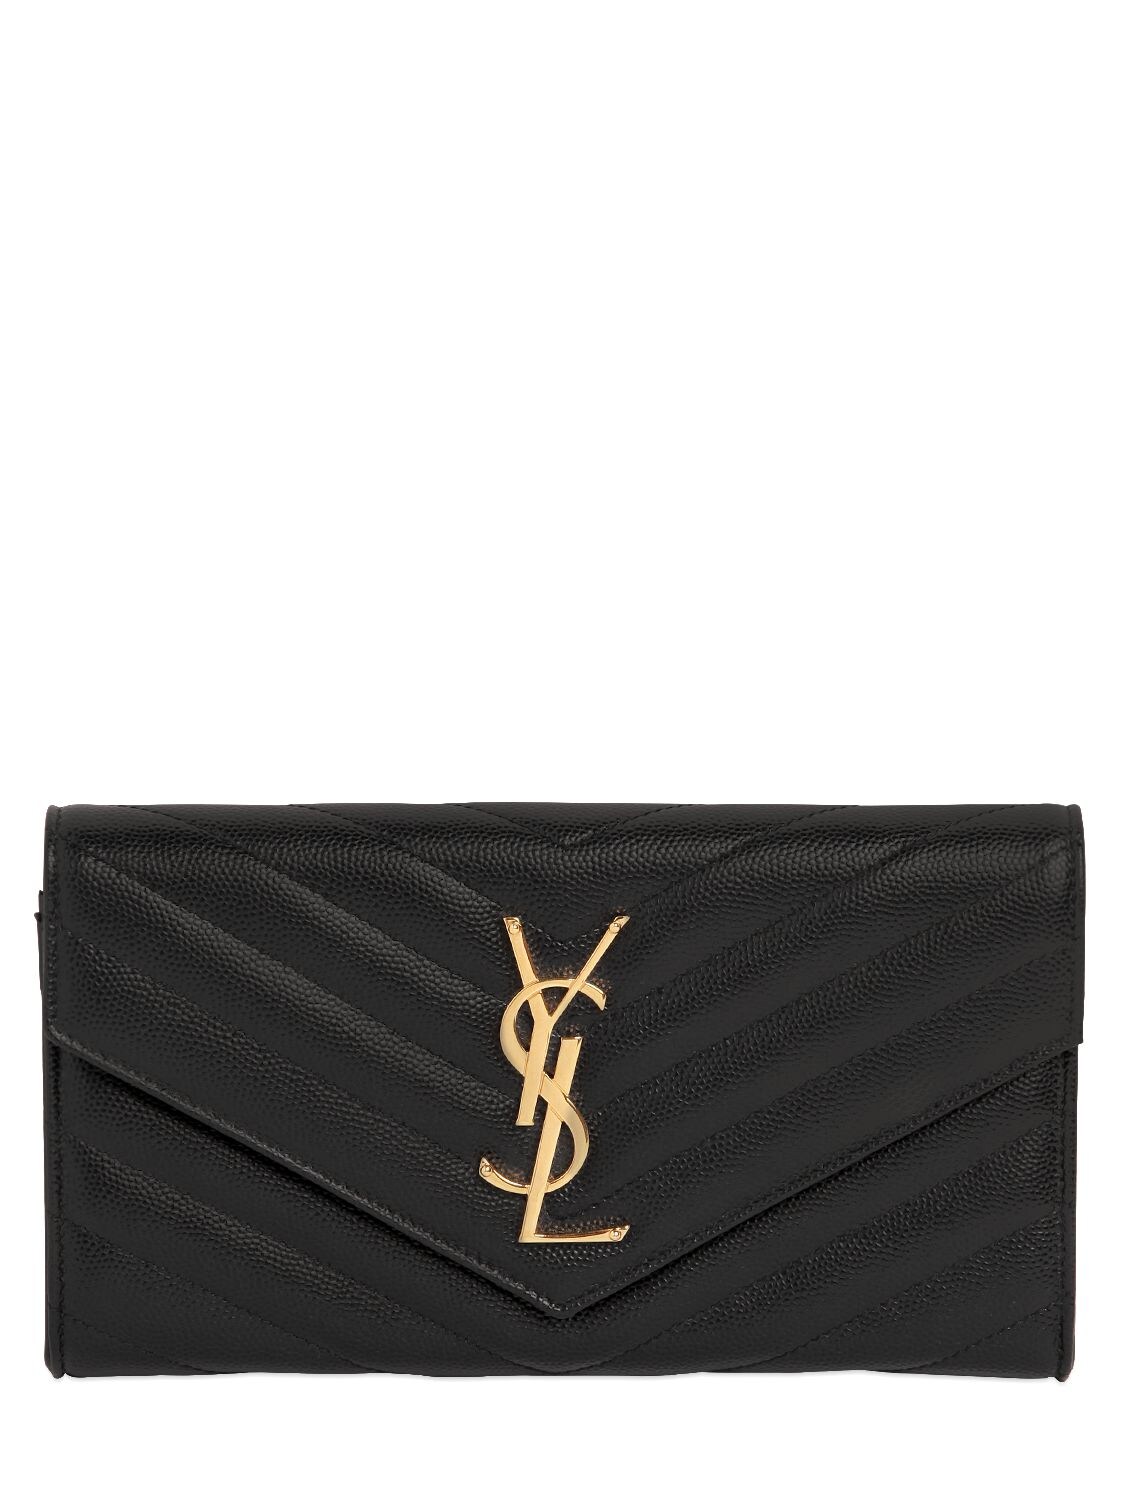 Saint Laurent Large Monogram Quilted Leather Wallet In Noir